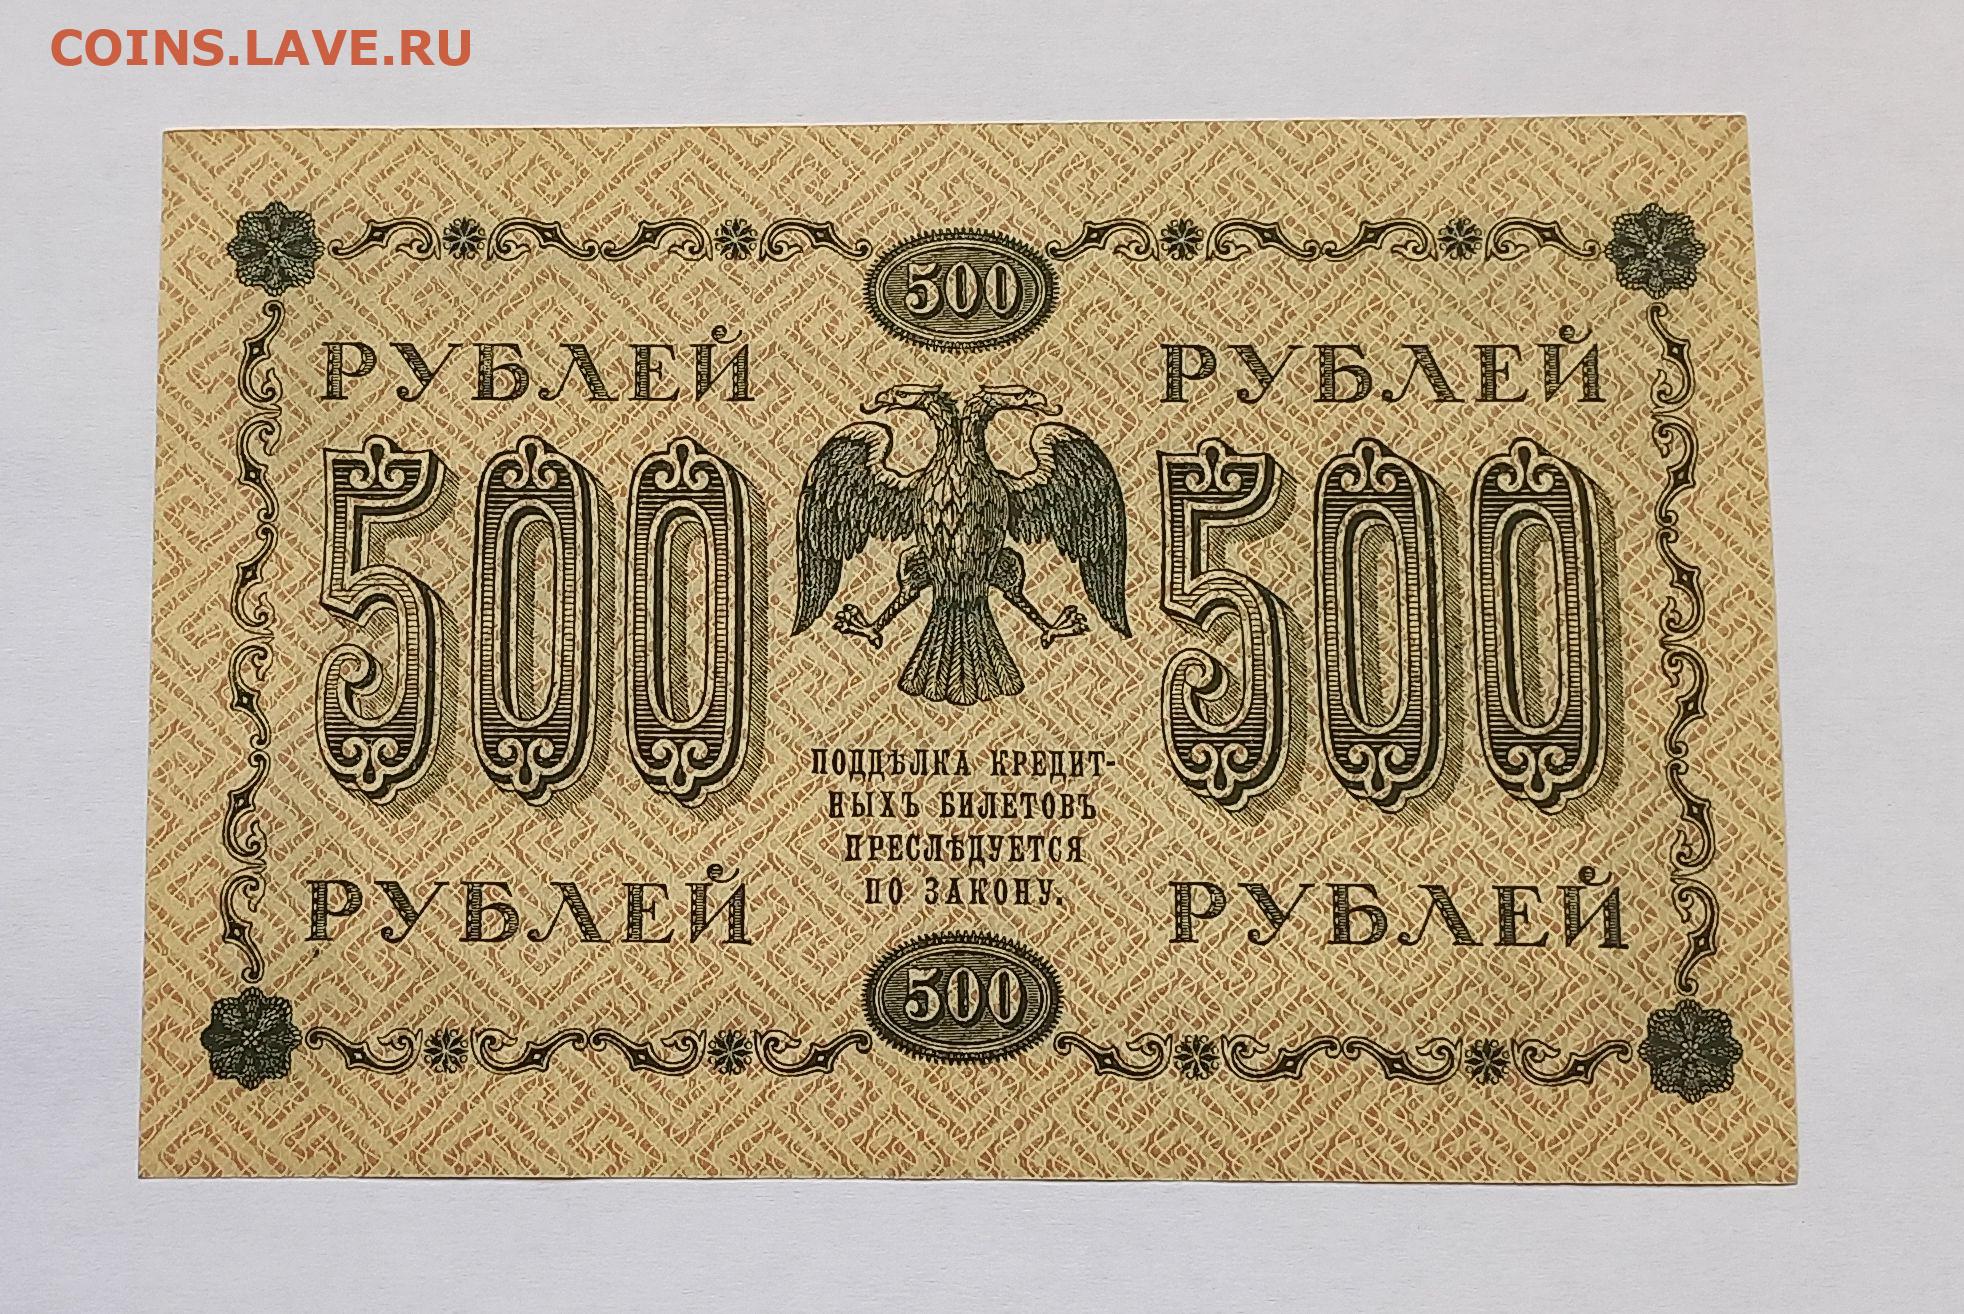 30 от 500 рублей